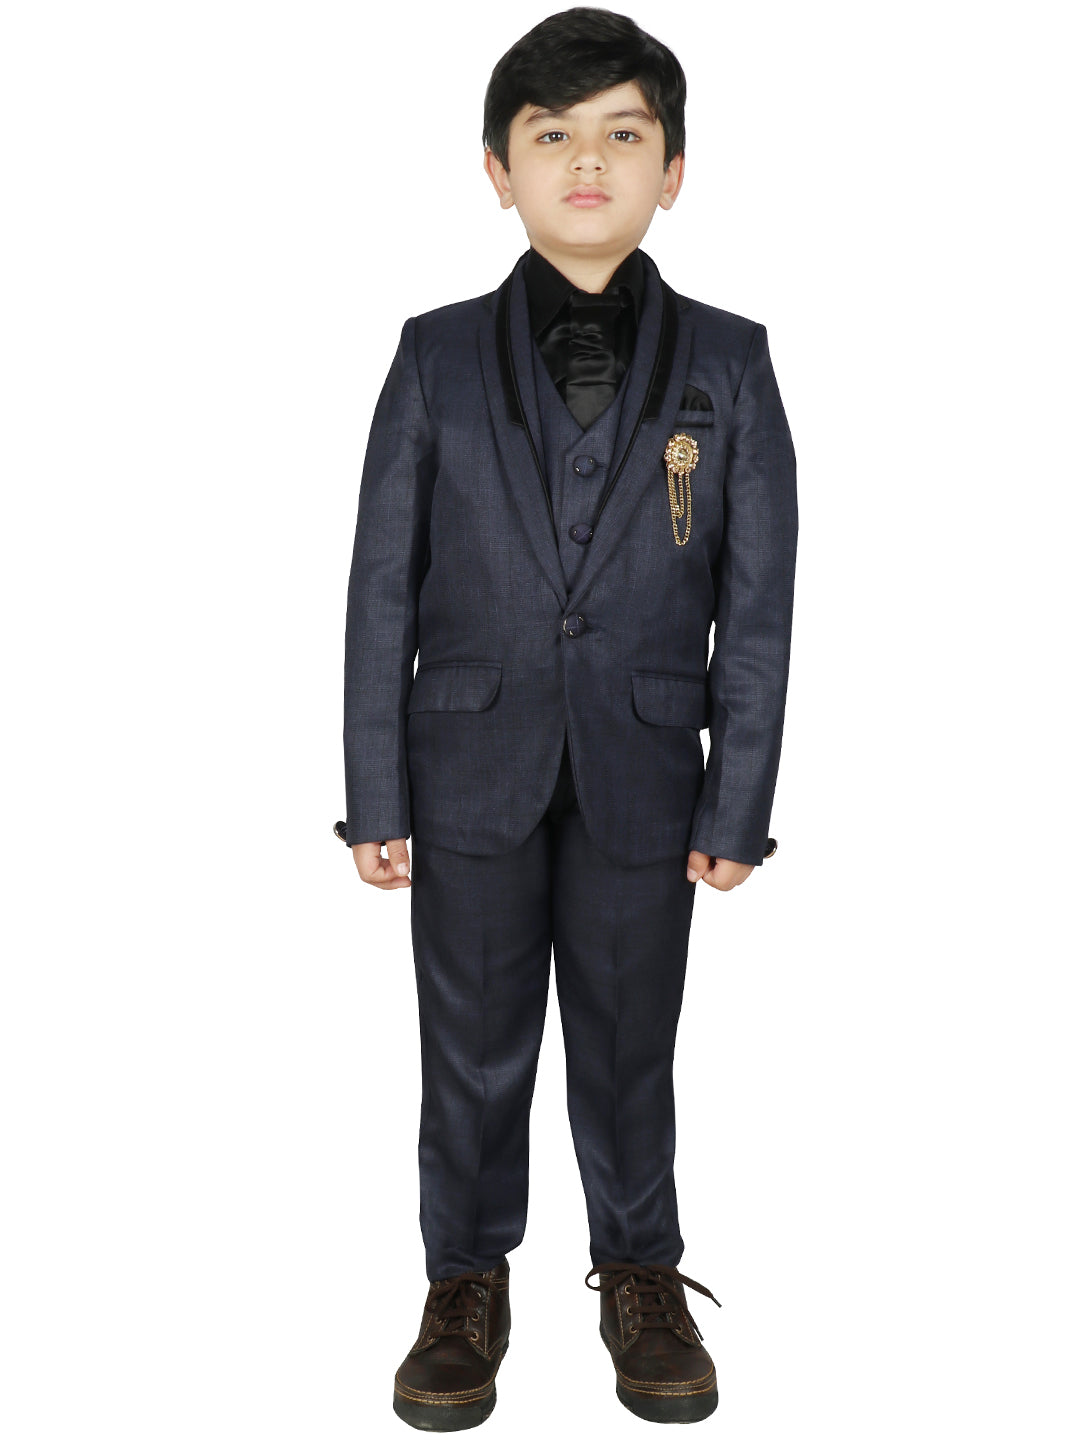 SG YUVRAJ Suits & Sets For Boys (TP-1053)